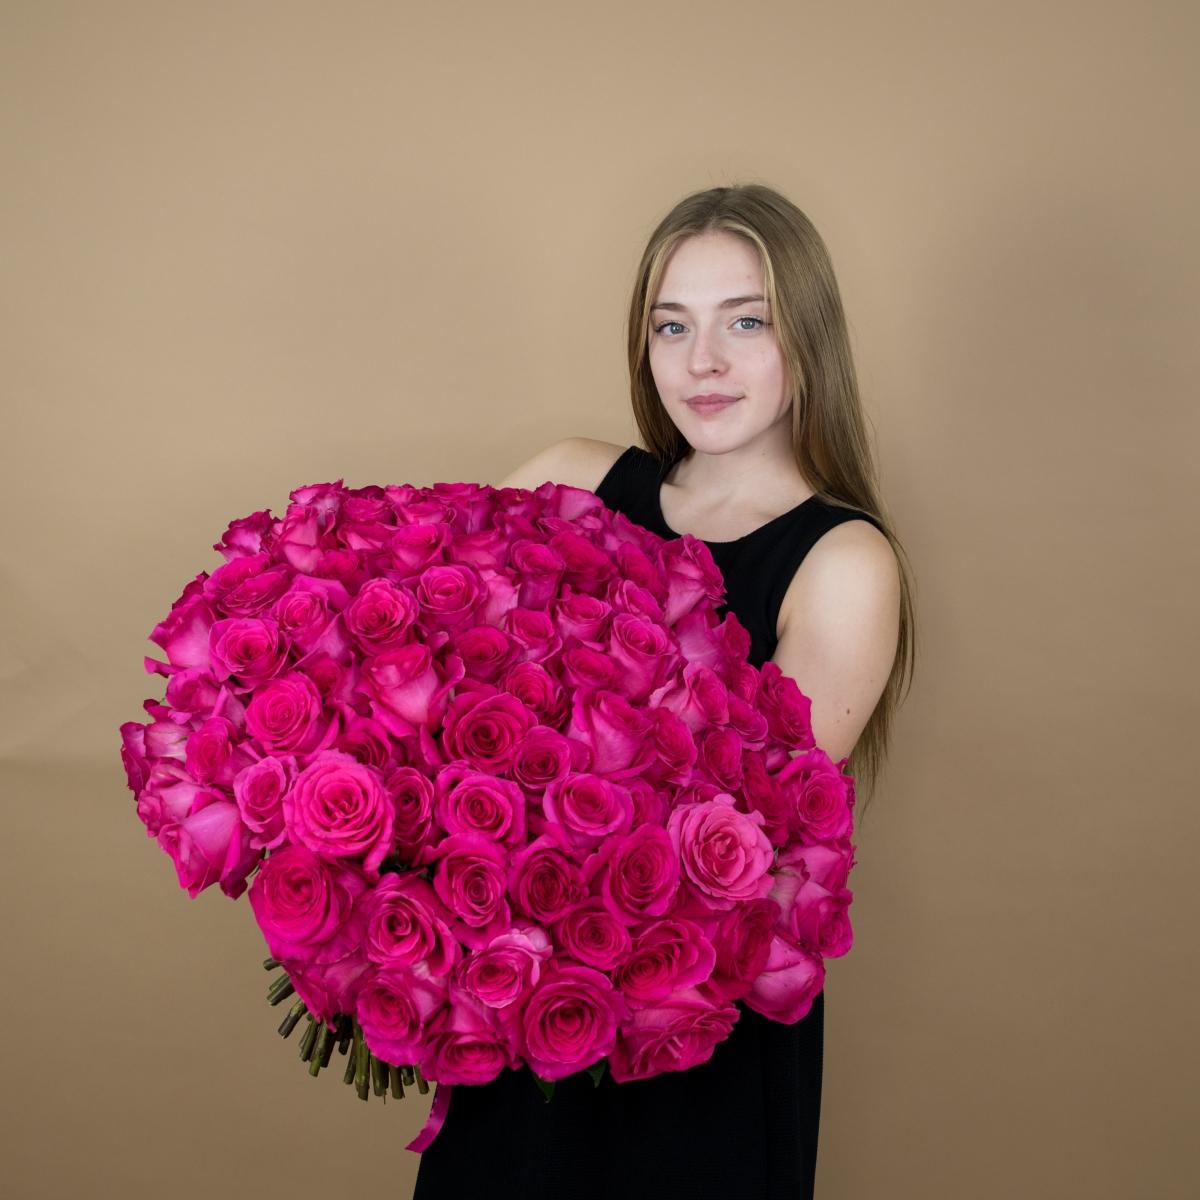 Букет из розовых роз 75 шт. (40 см) артикул: 86779